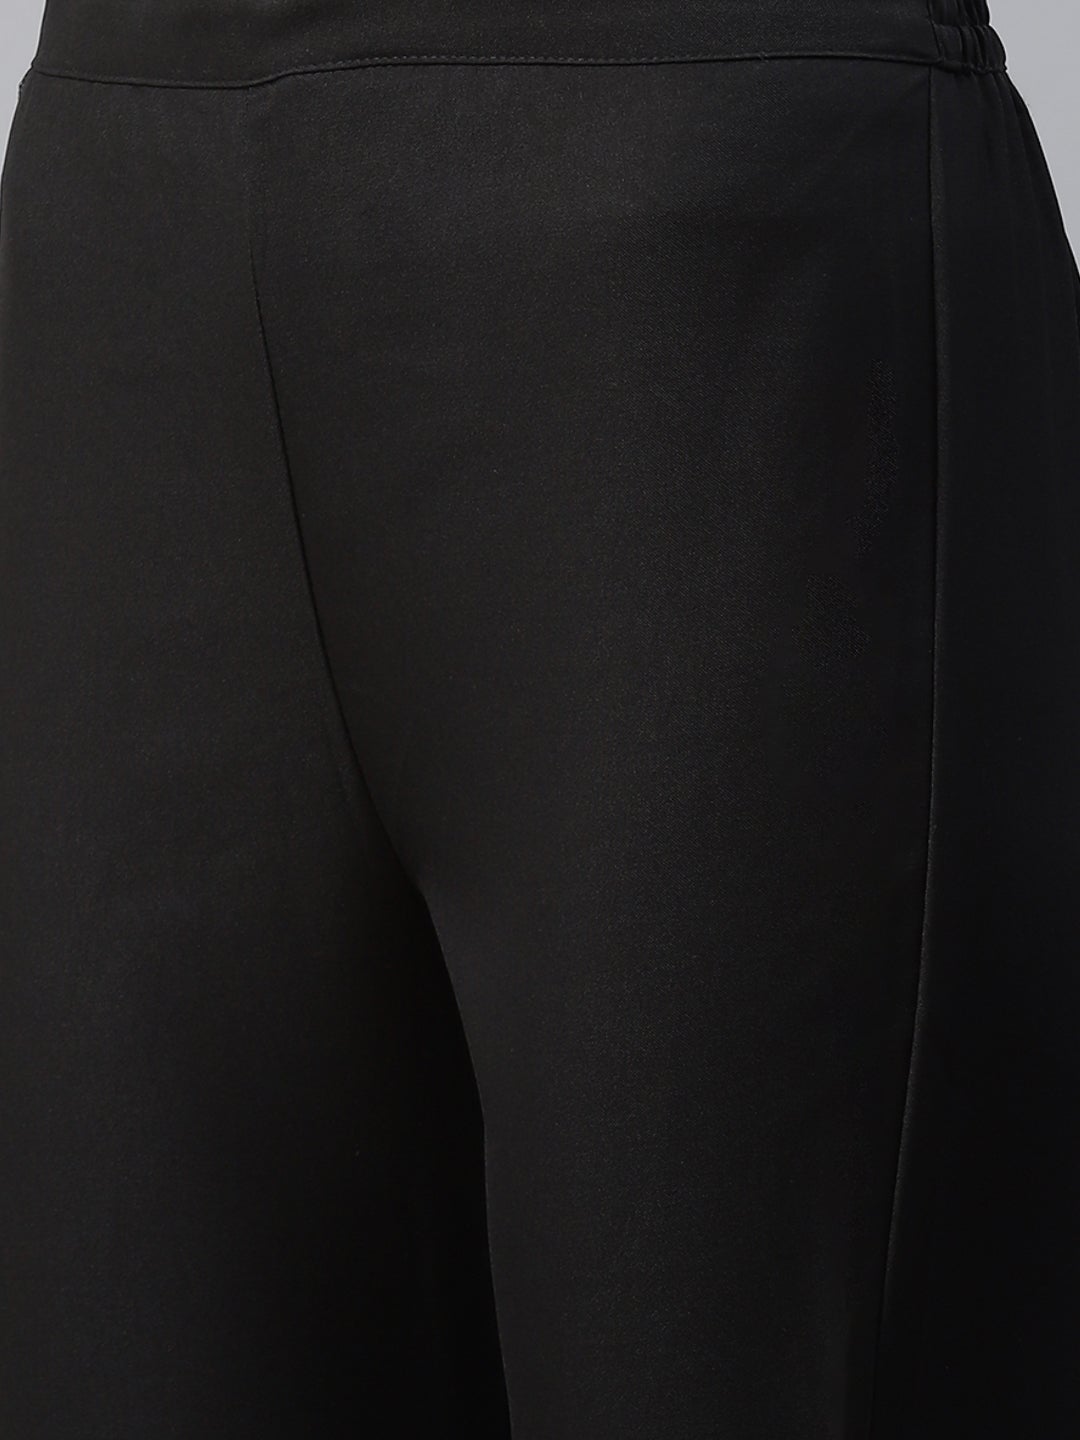 Mindhal Women's Black Color Digital Printed Straight Kurta And Pant Set